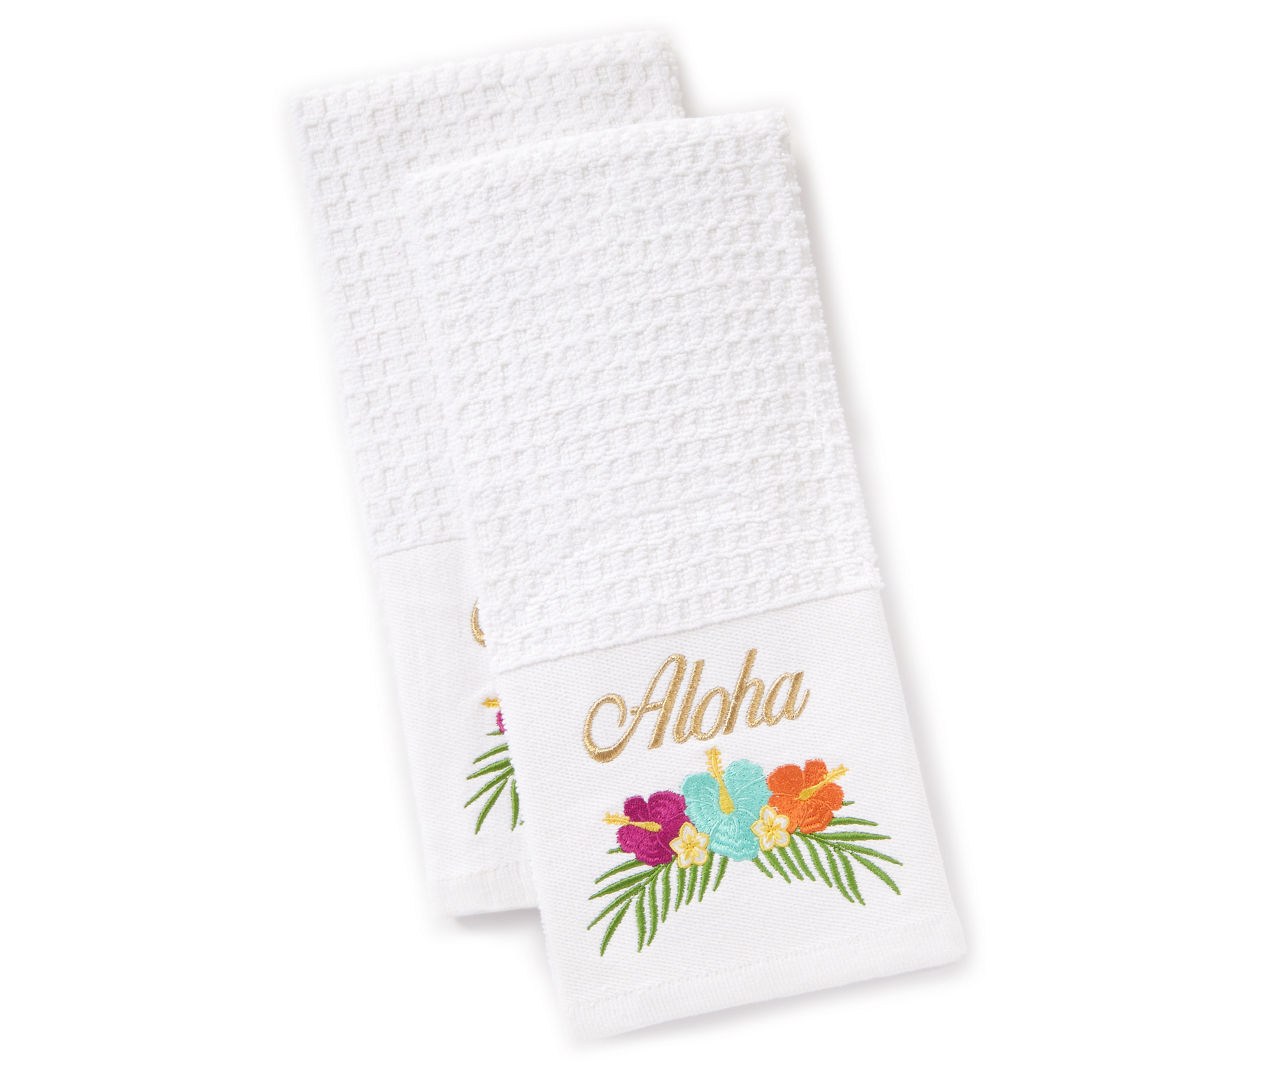 Floral Kitchen Towel set of 2 Flower Themed Kitchen Towels 